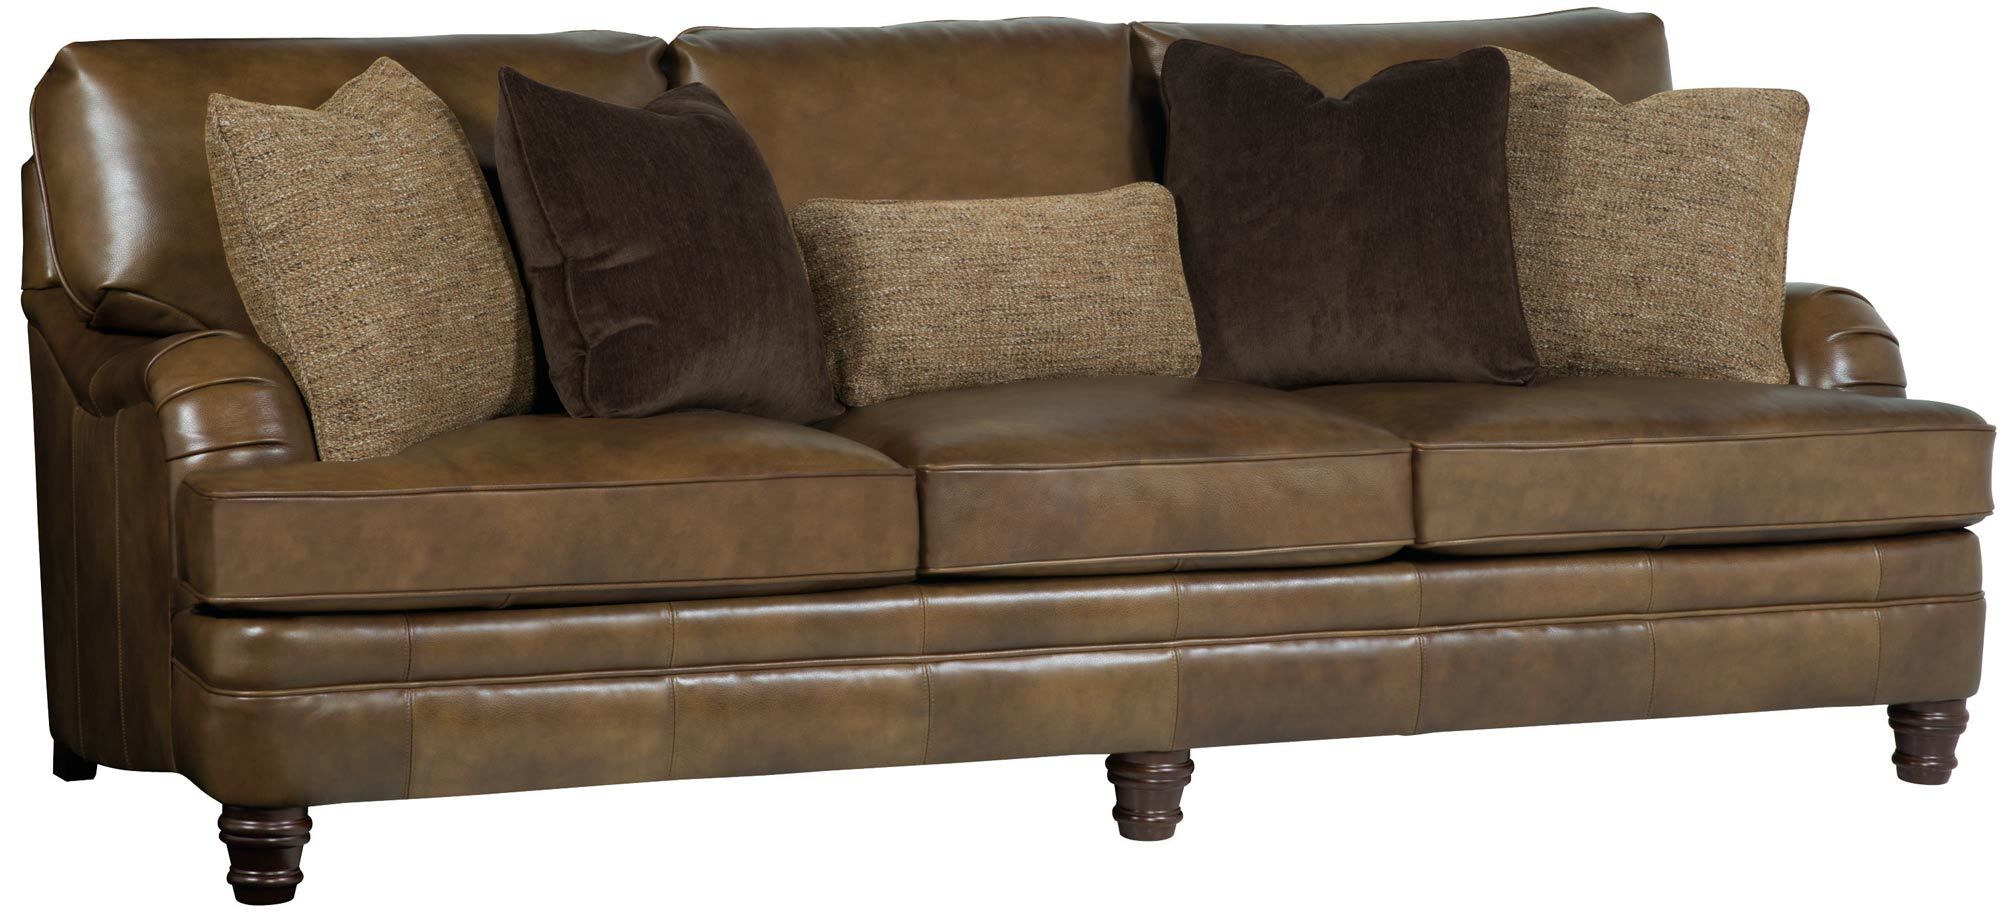 bernhardt tarleton leather sofa reviews